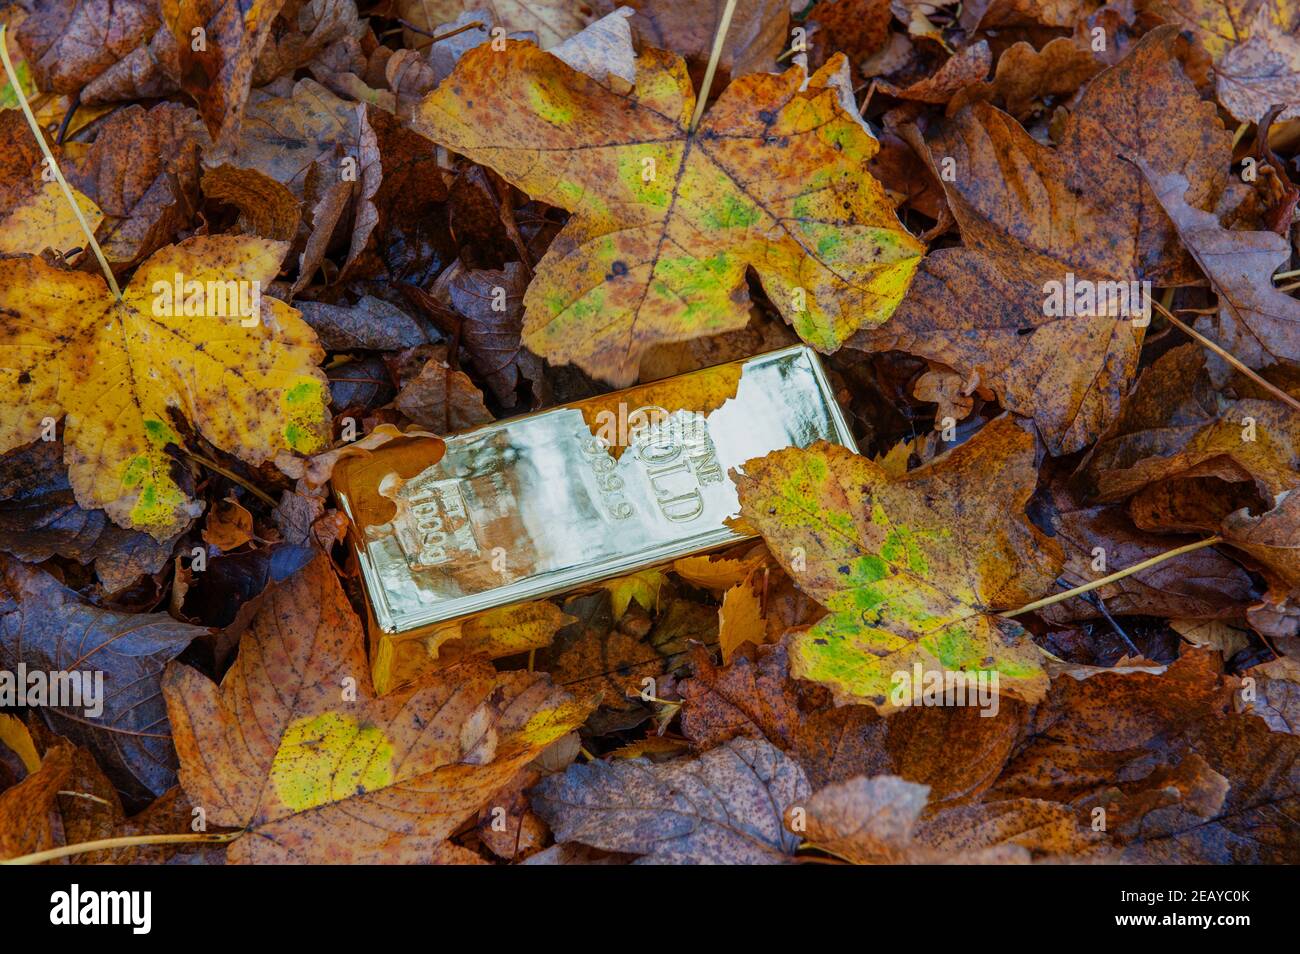 A Gold bar gleaming through fallen autumn leaves Stock Photo